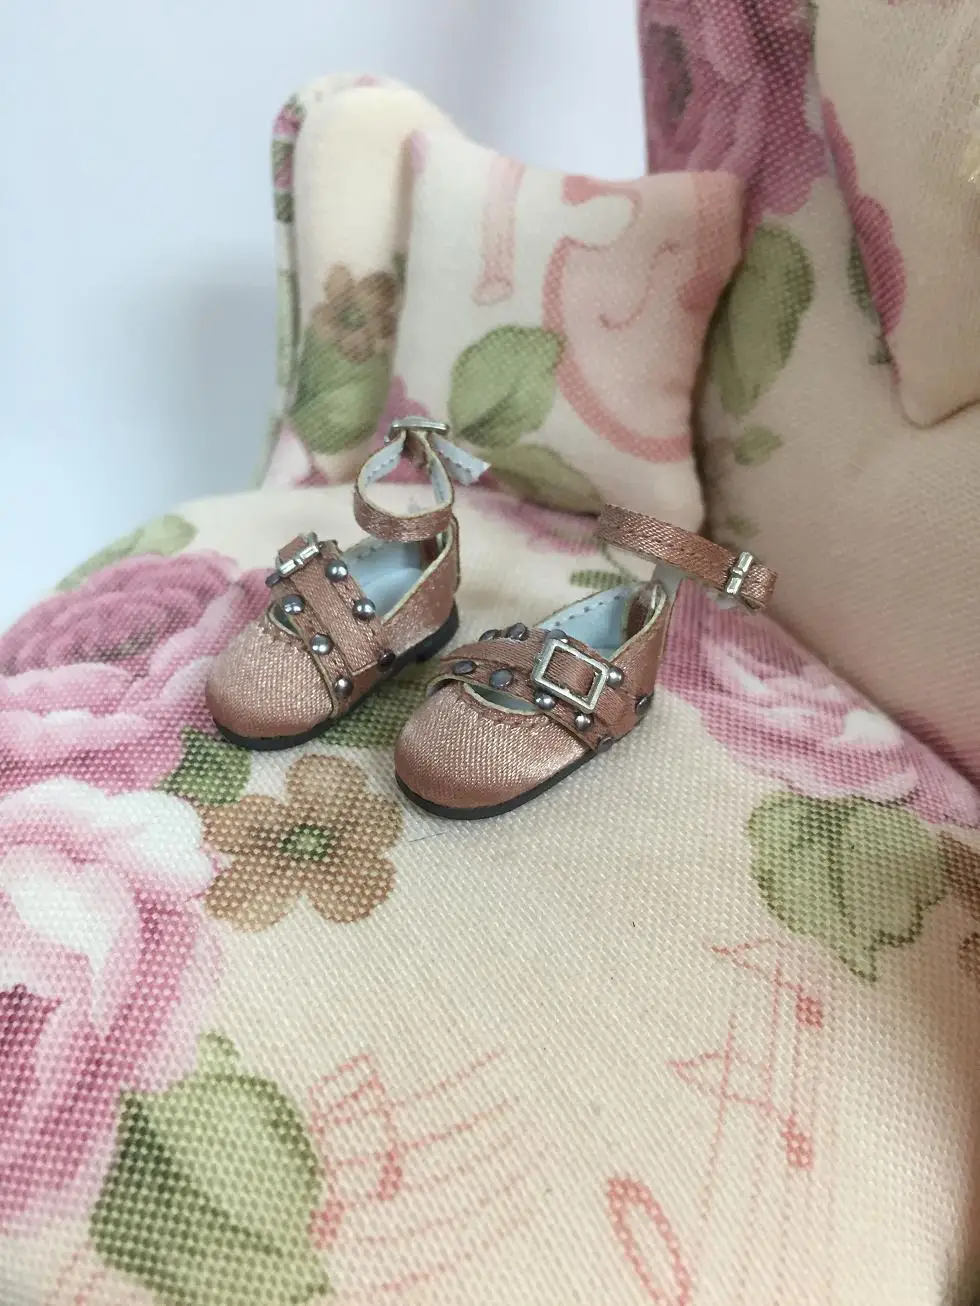 Куклы обувь для blyth Azone куклы OB кукла licca Длина: 2,8 см повседневная обувь